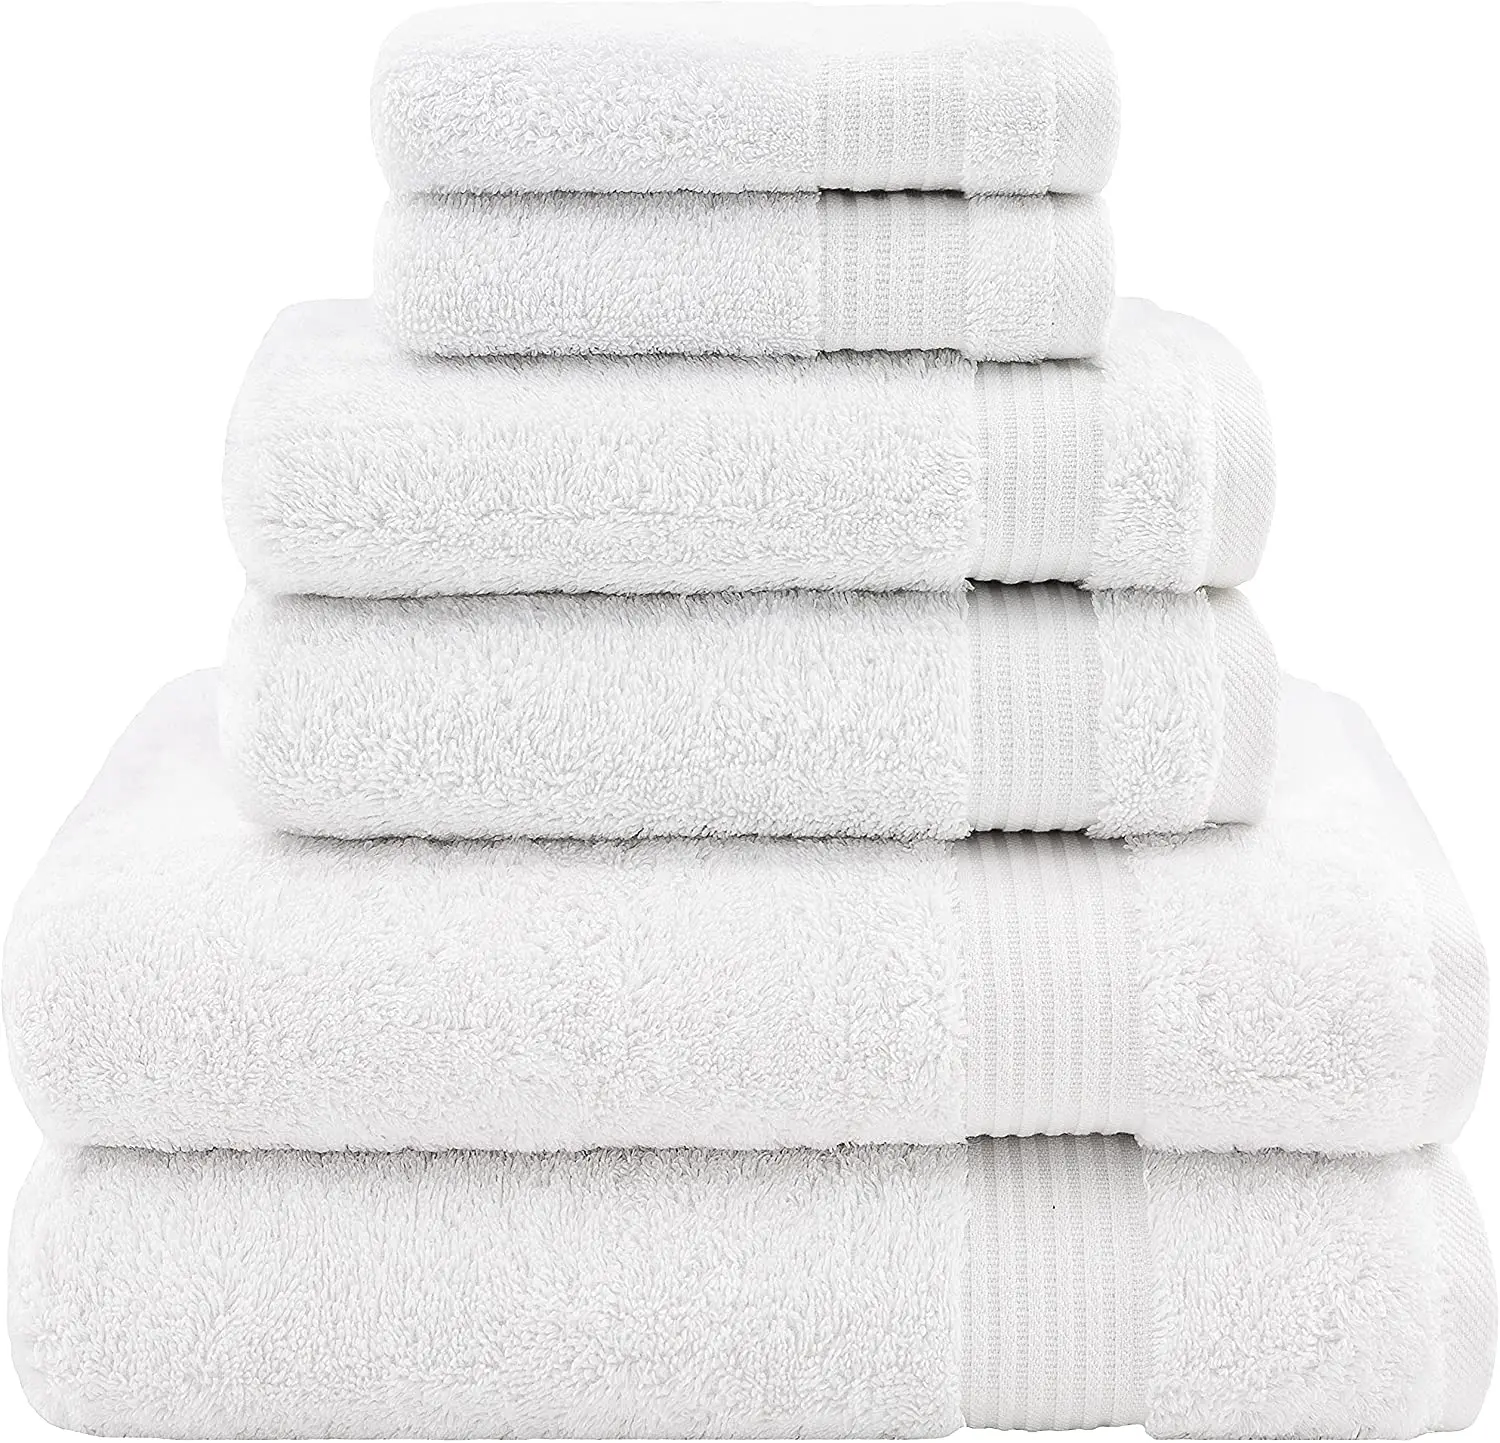 

Hotel Spa Absorbent Soft Decorative Kitchen Bathroom Sets Turkish Cotton Bath Towels Hand Towels Washcloths 6pcs Towel Set